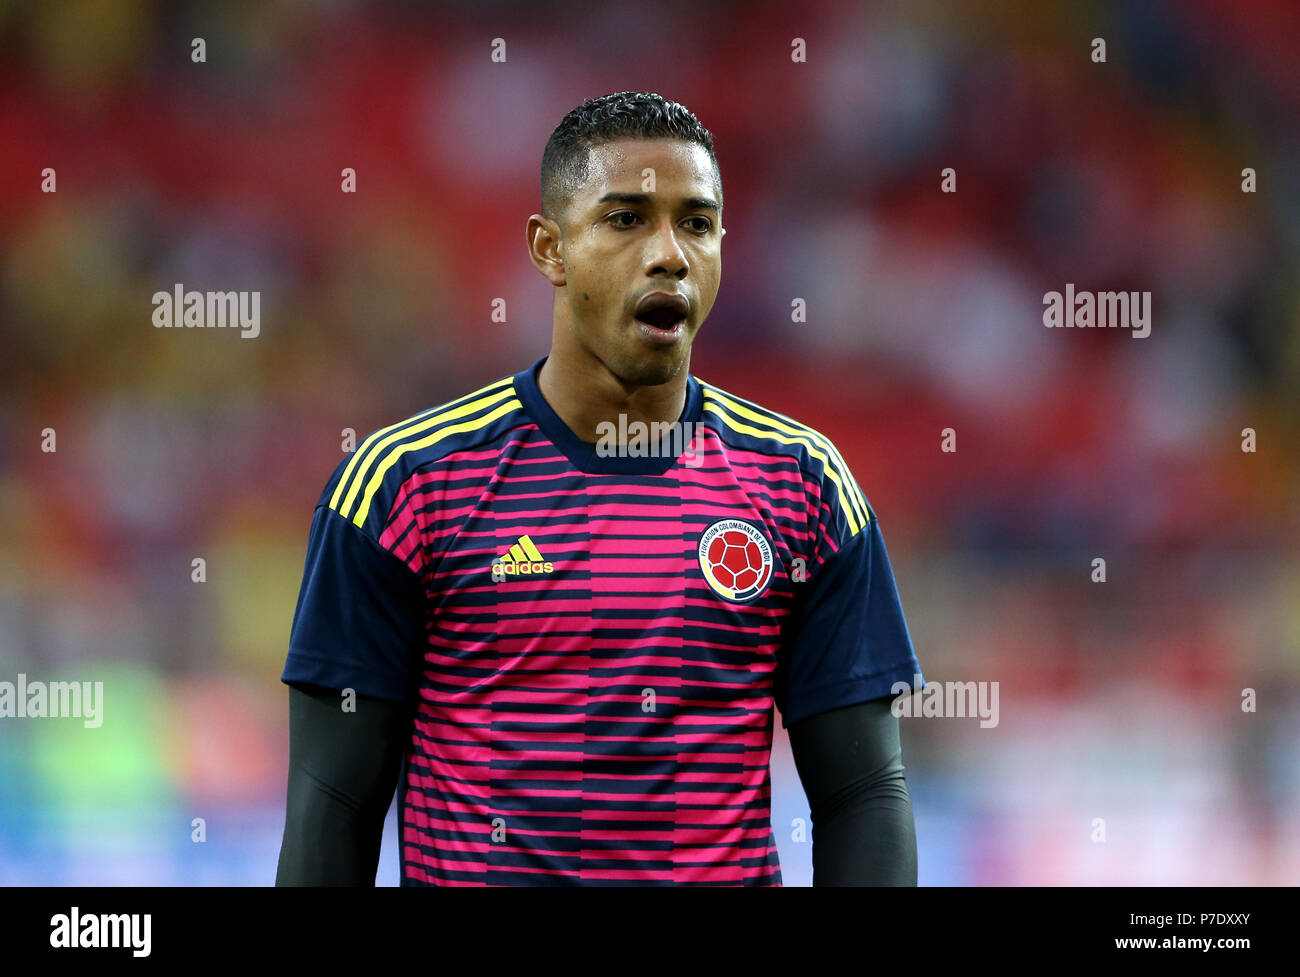 colombia goalkeeper jersey